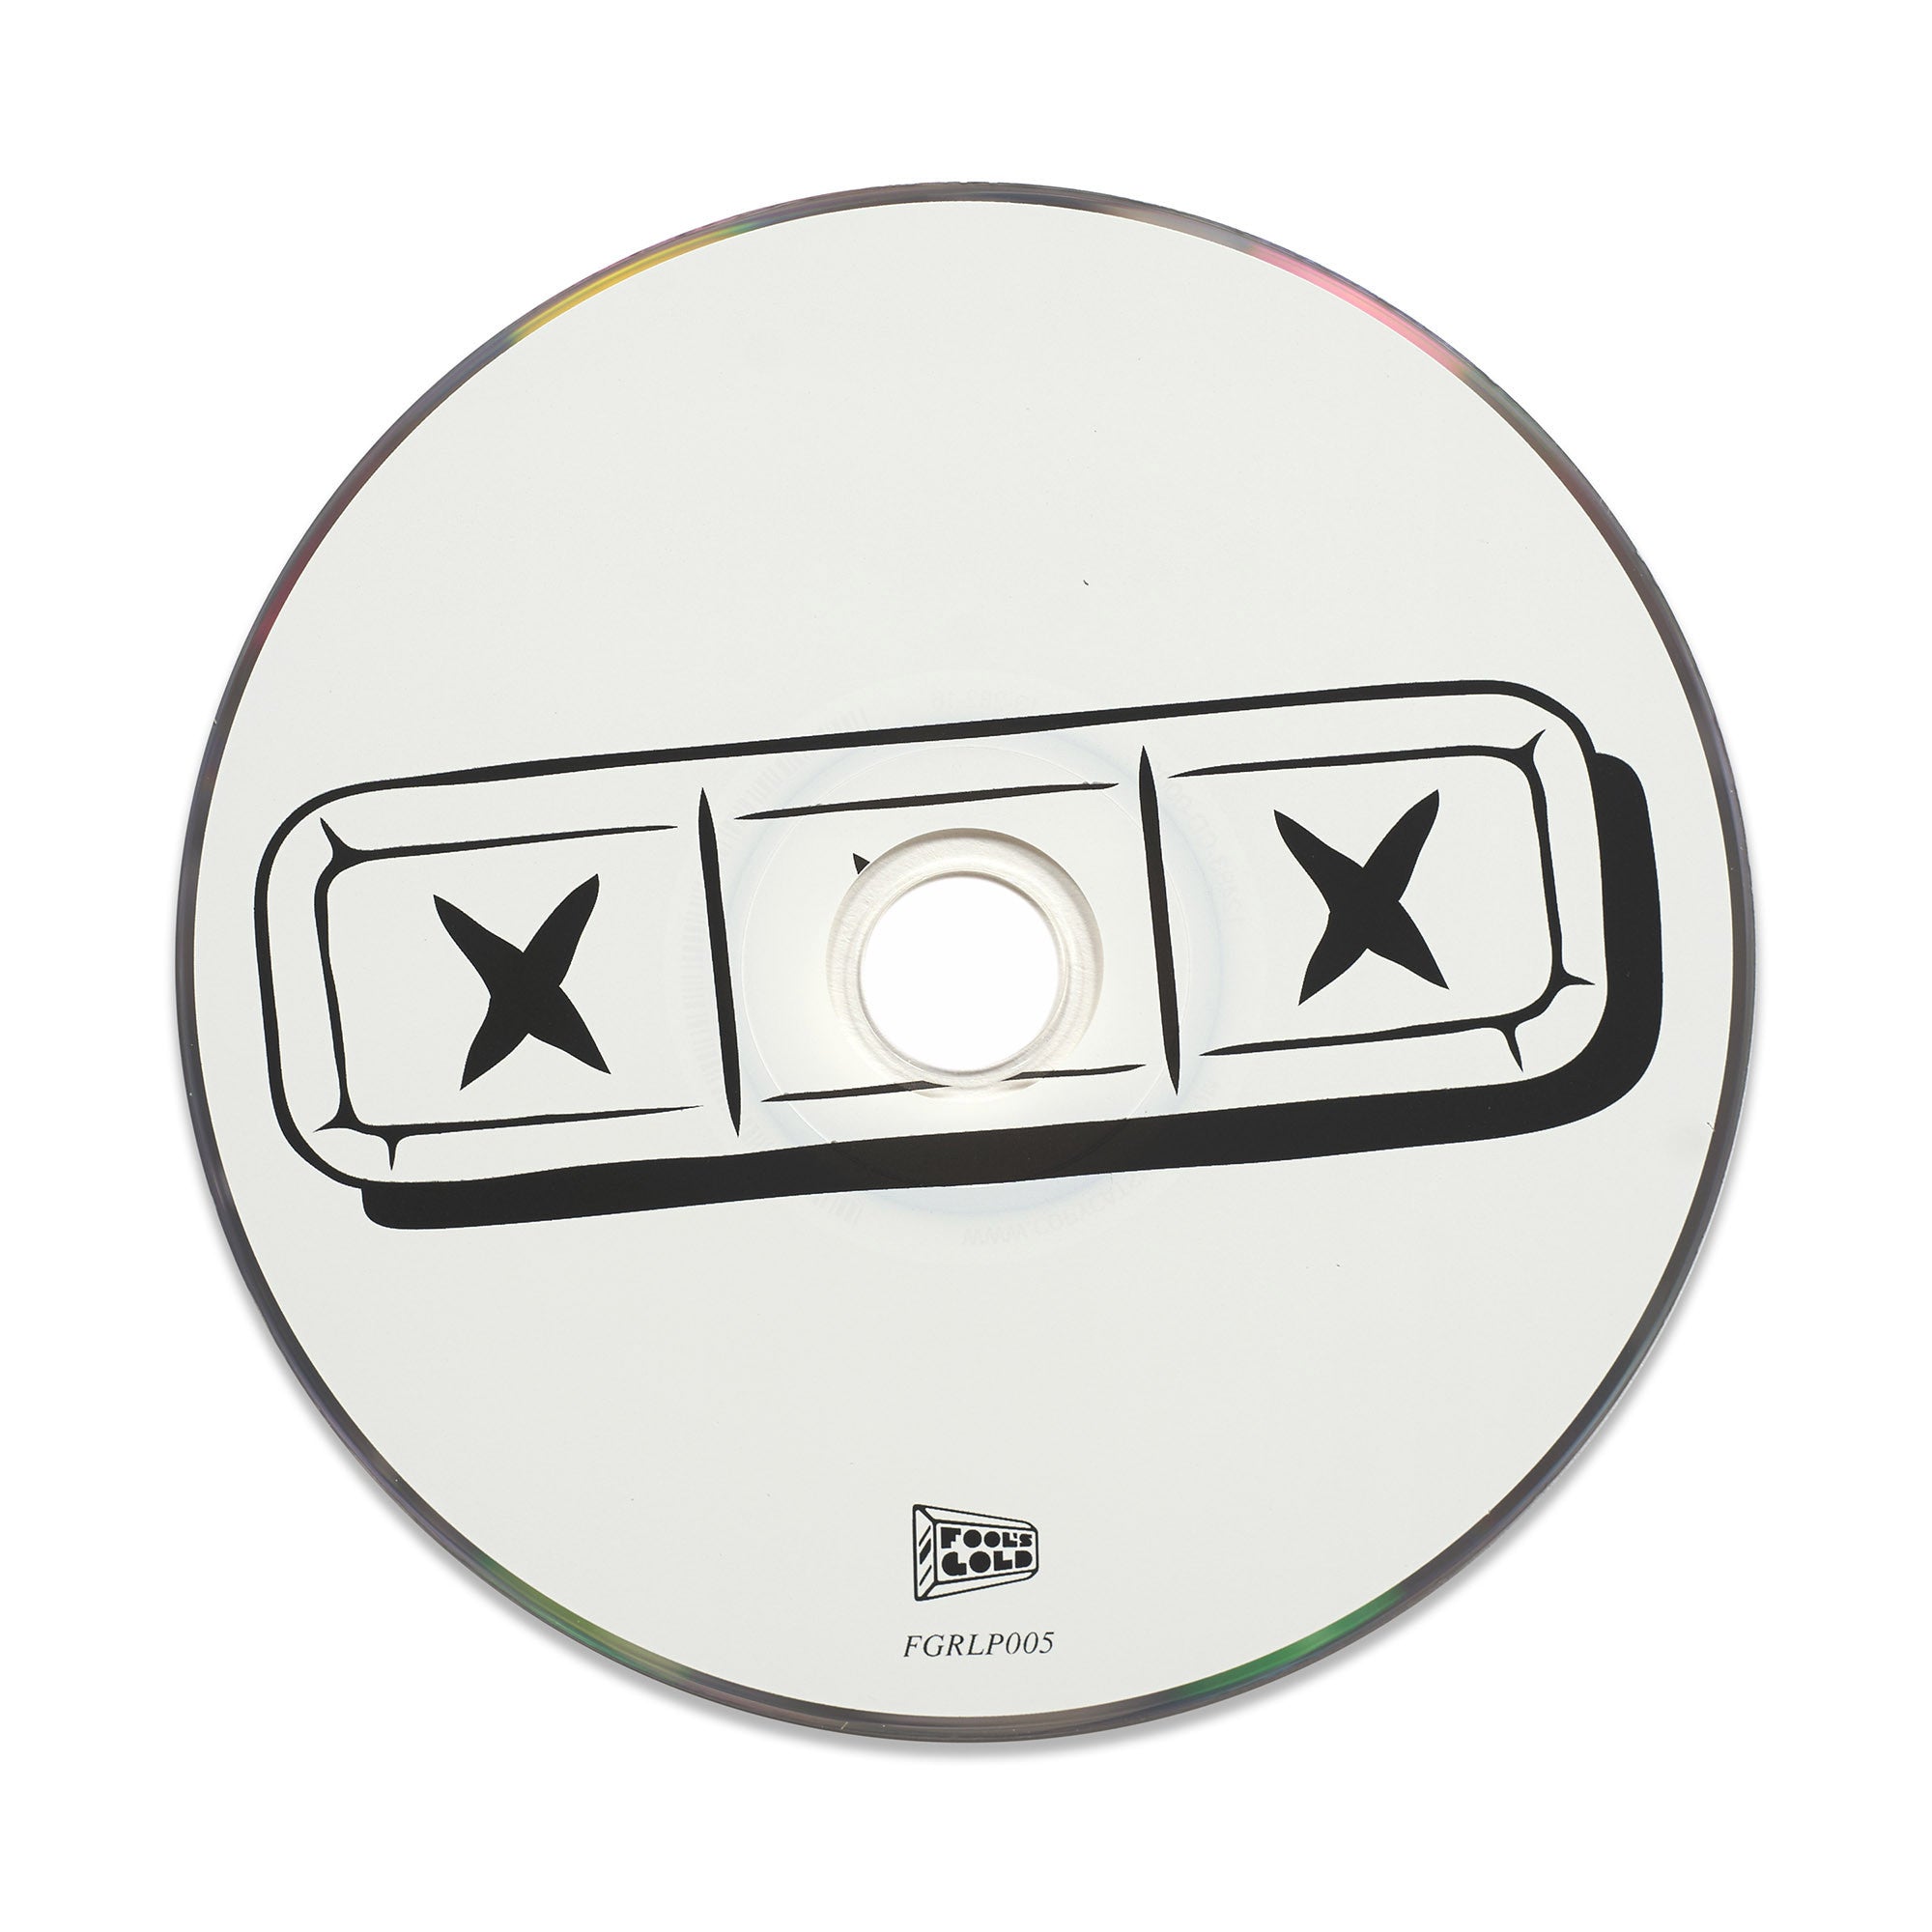 Danny Brown “XXX” CD